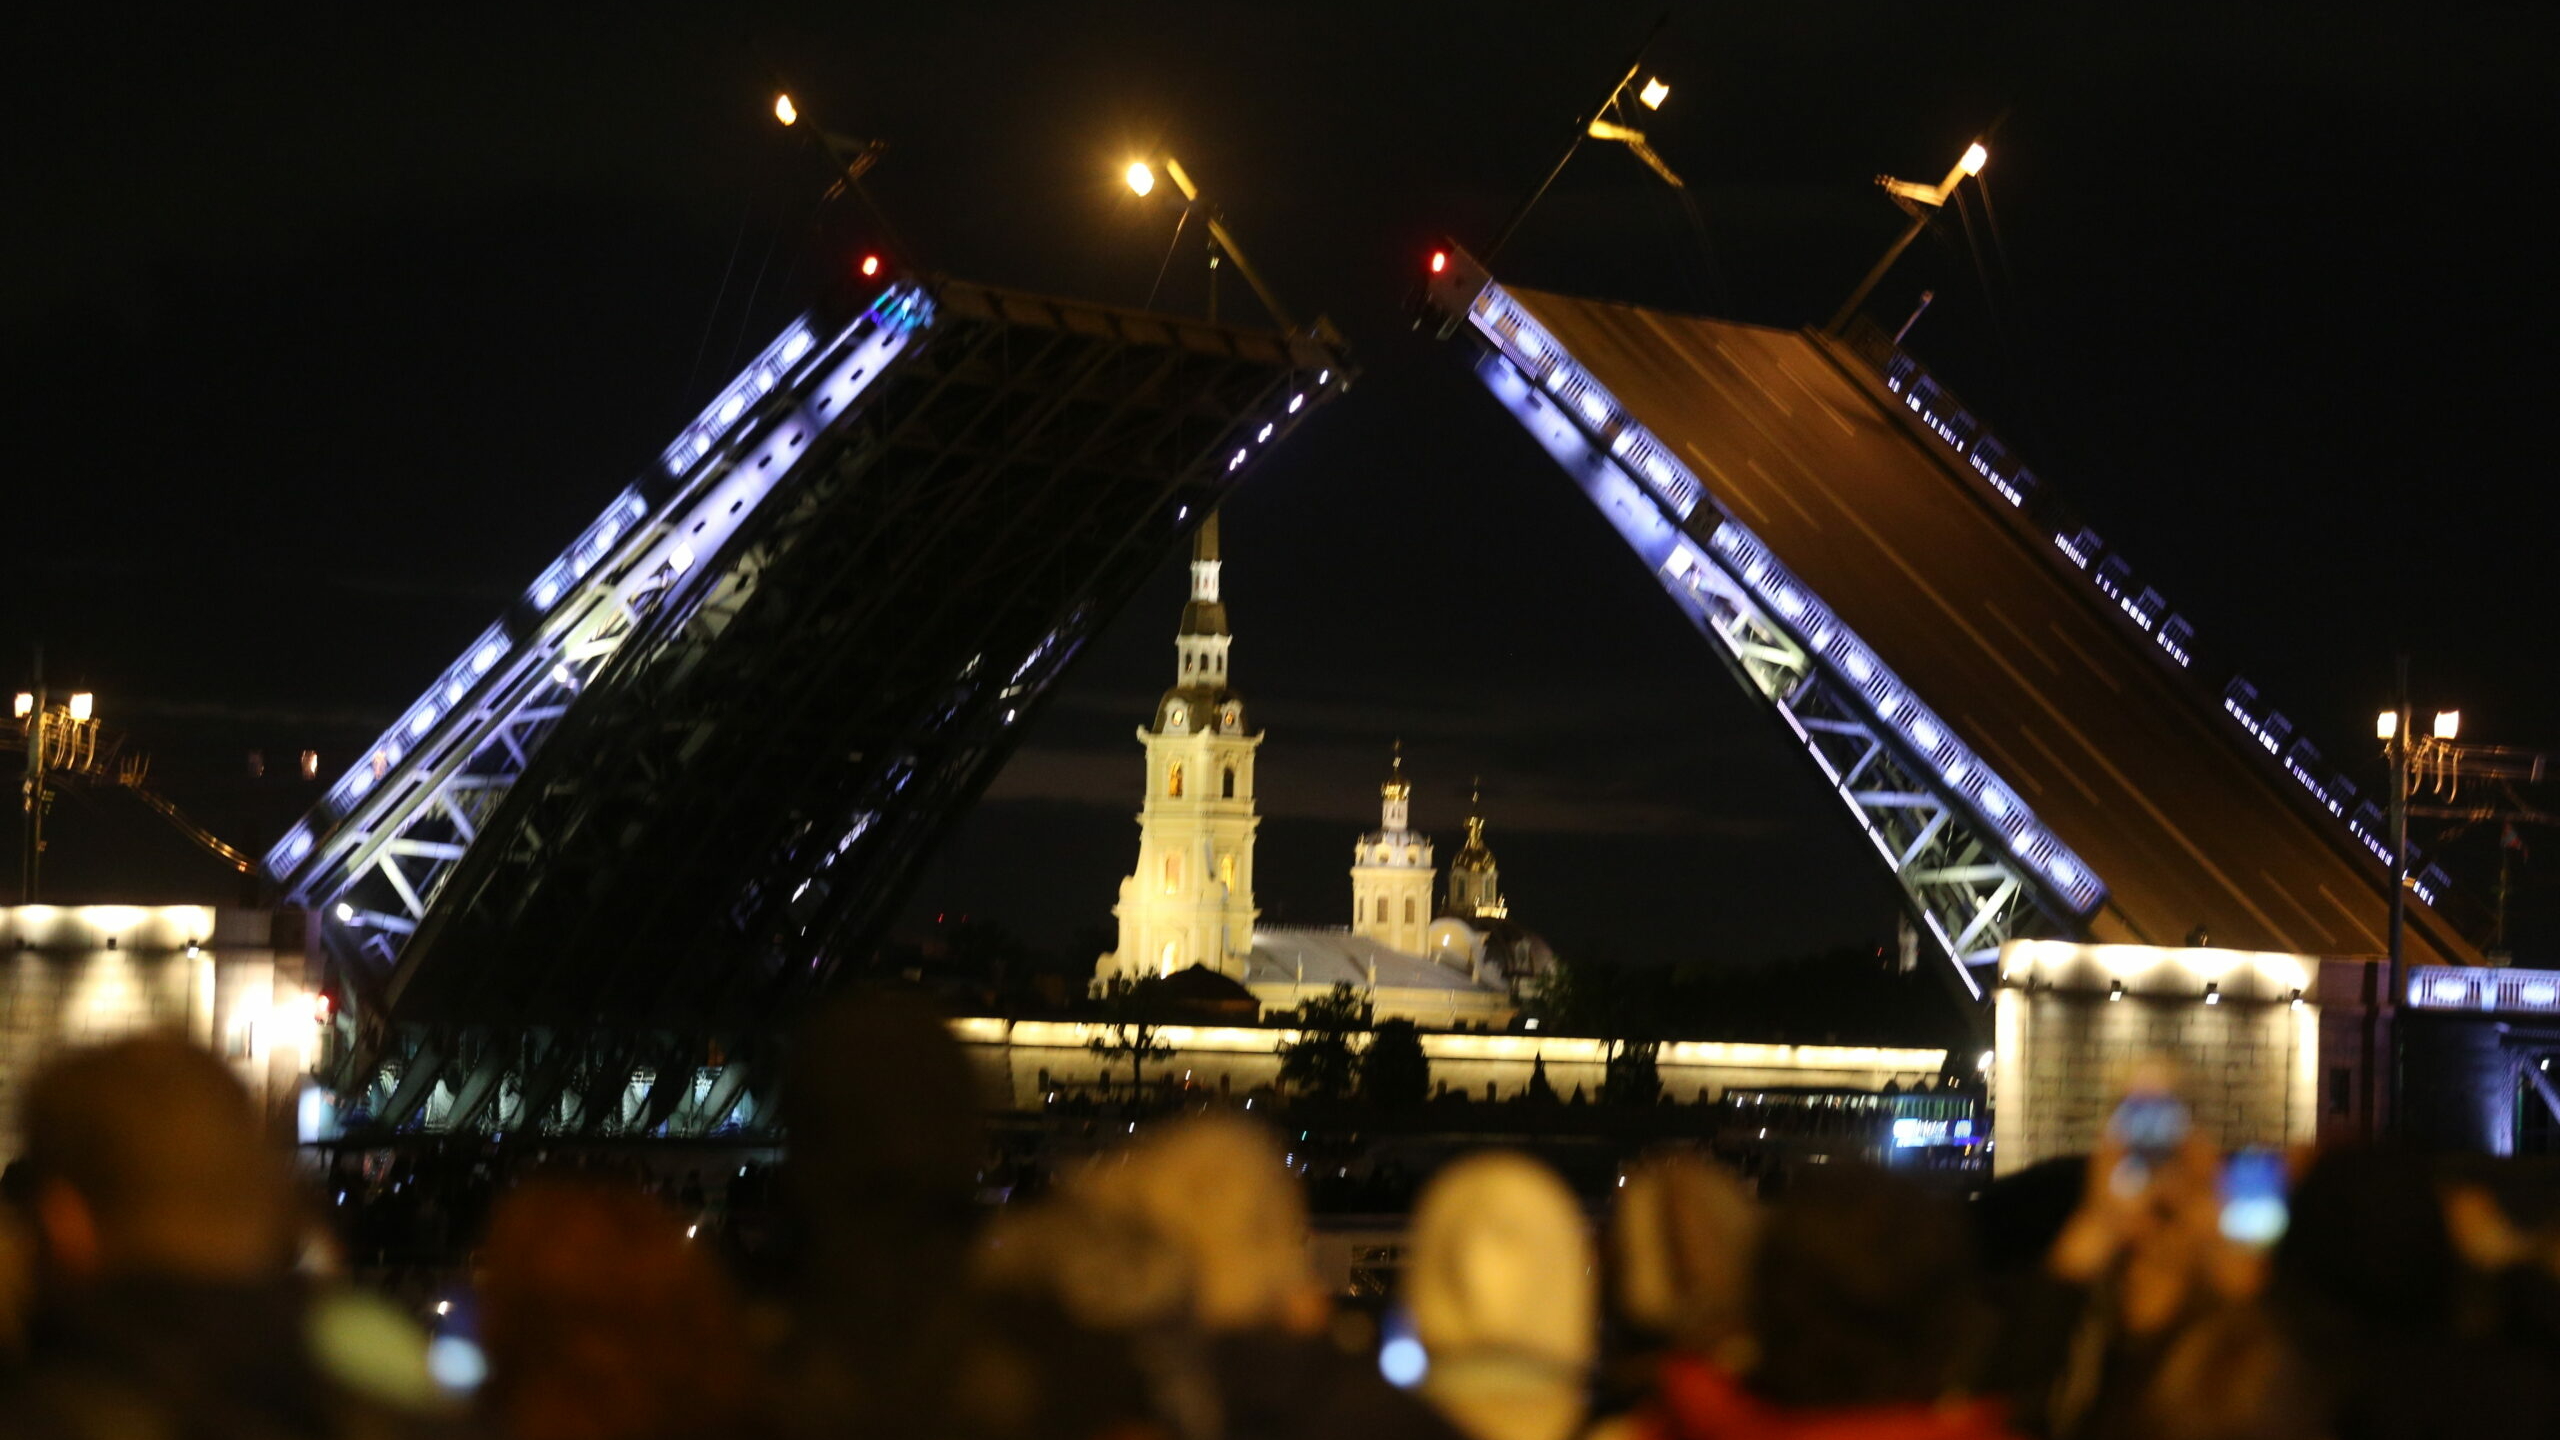 Дворцовый мост 9 августа разведут под симфонию Шостаковича вне графика